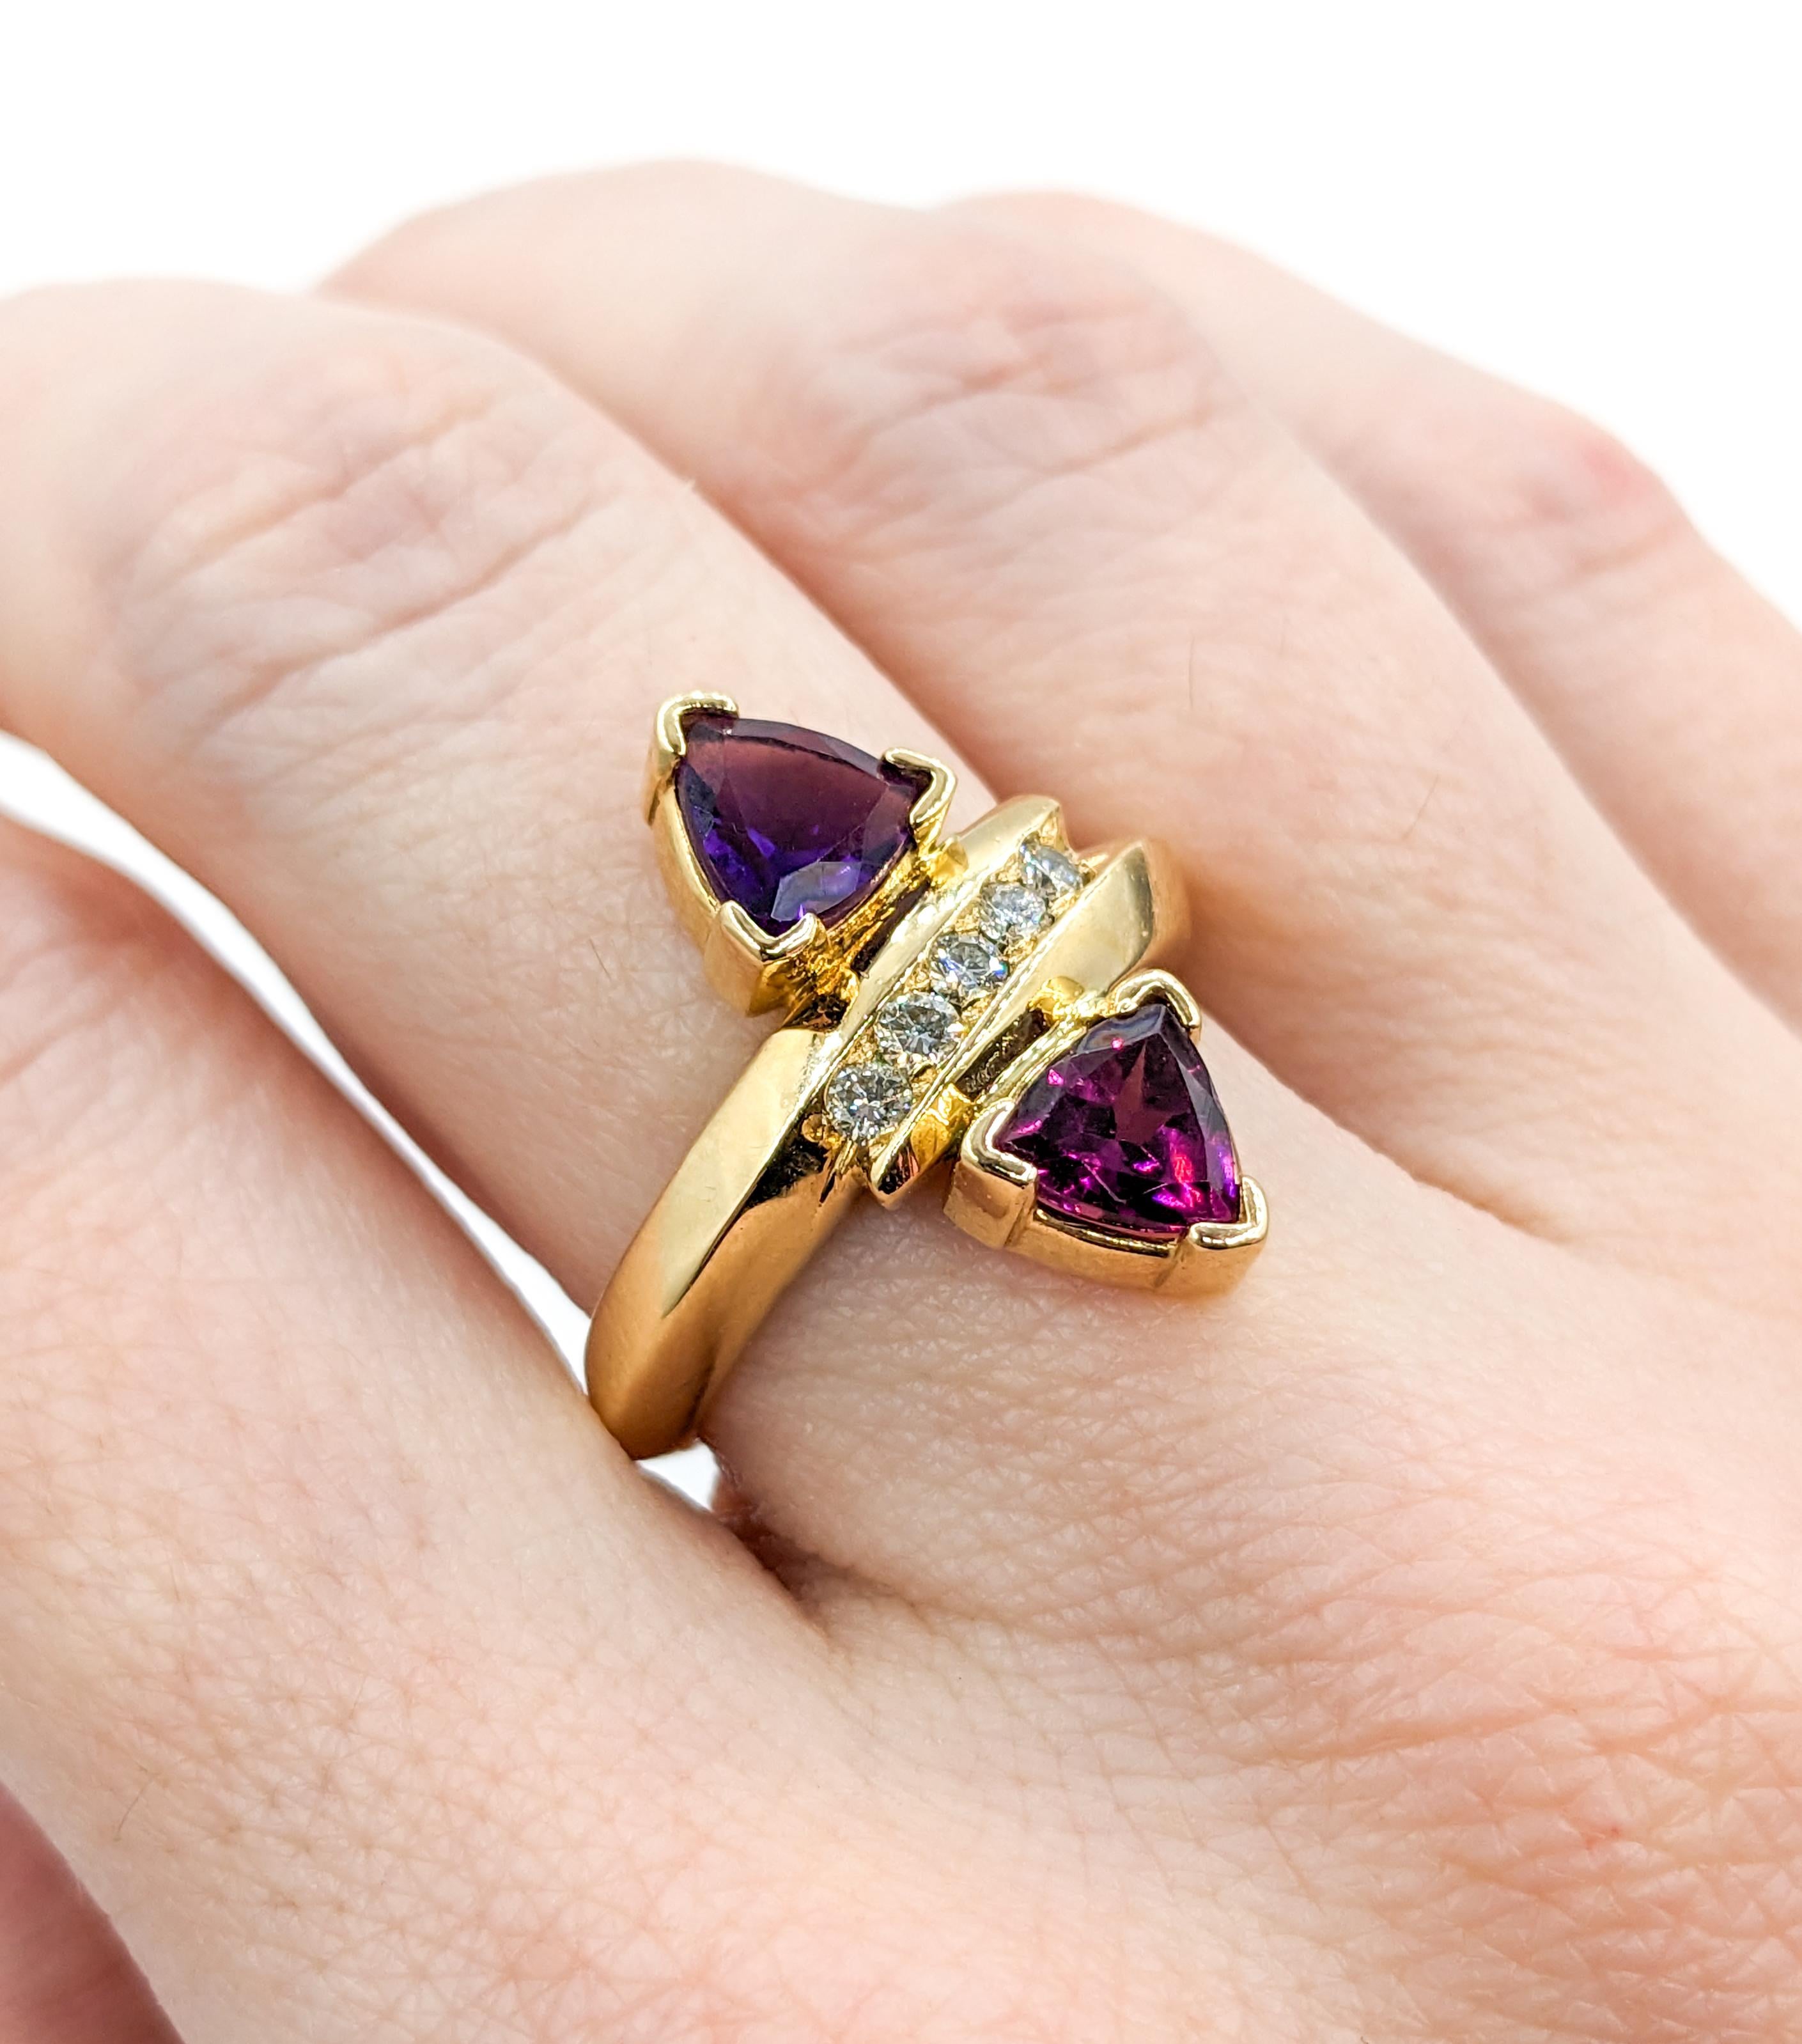 Women's Vintage Trillion Cut Amethyst, Garnet, & Diamond Ring in Gold For Sale